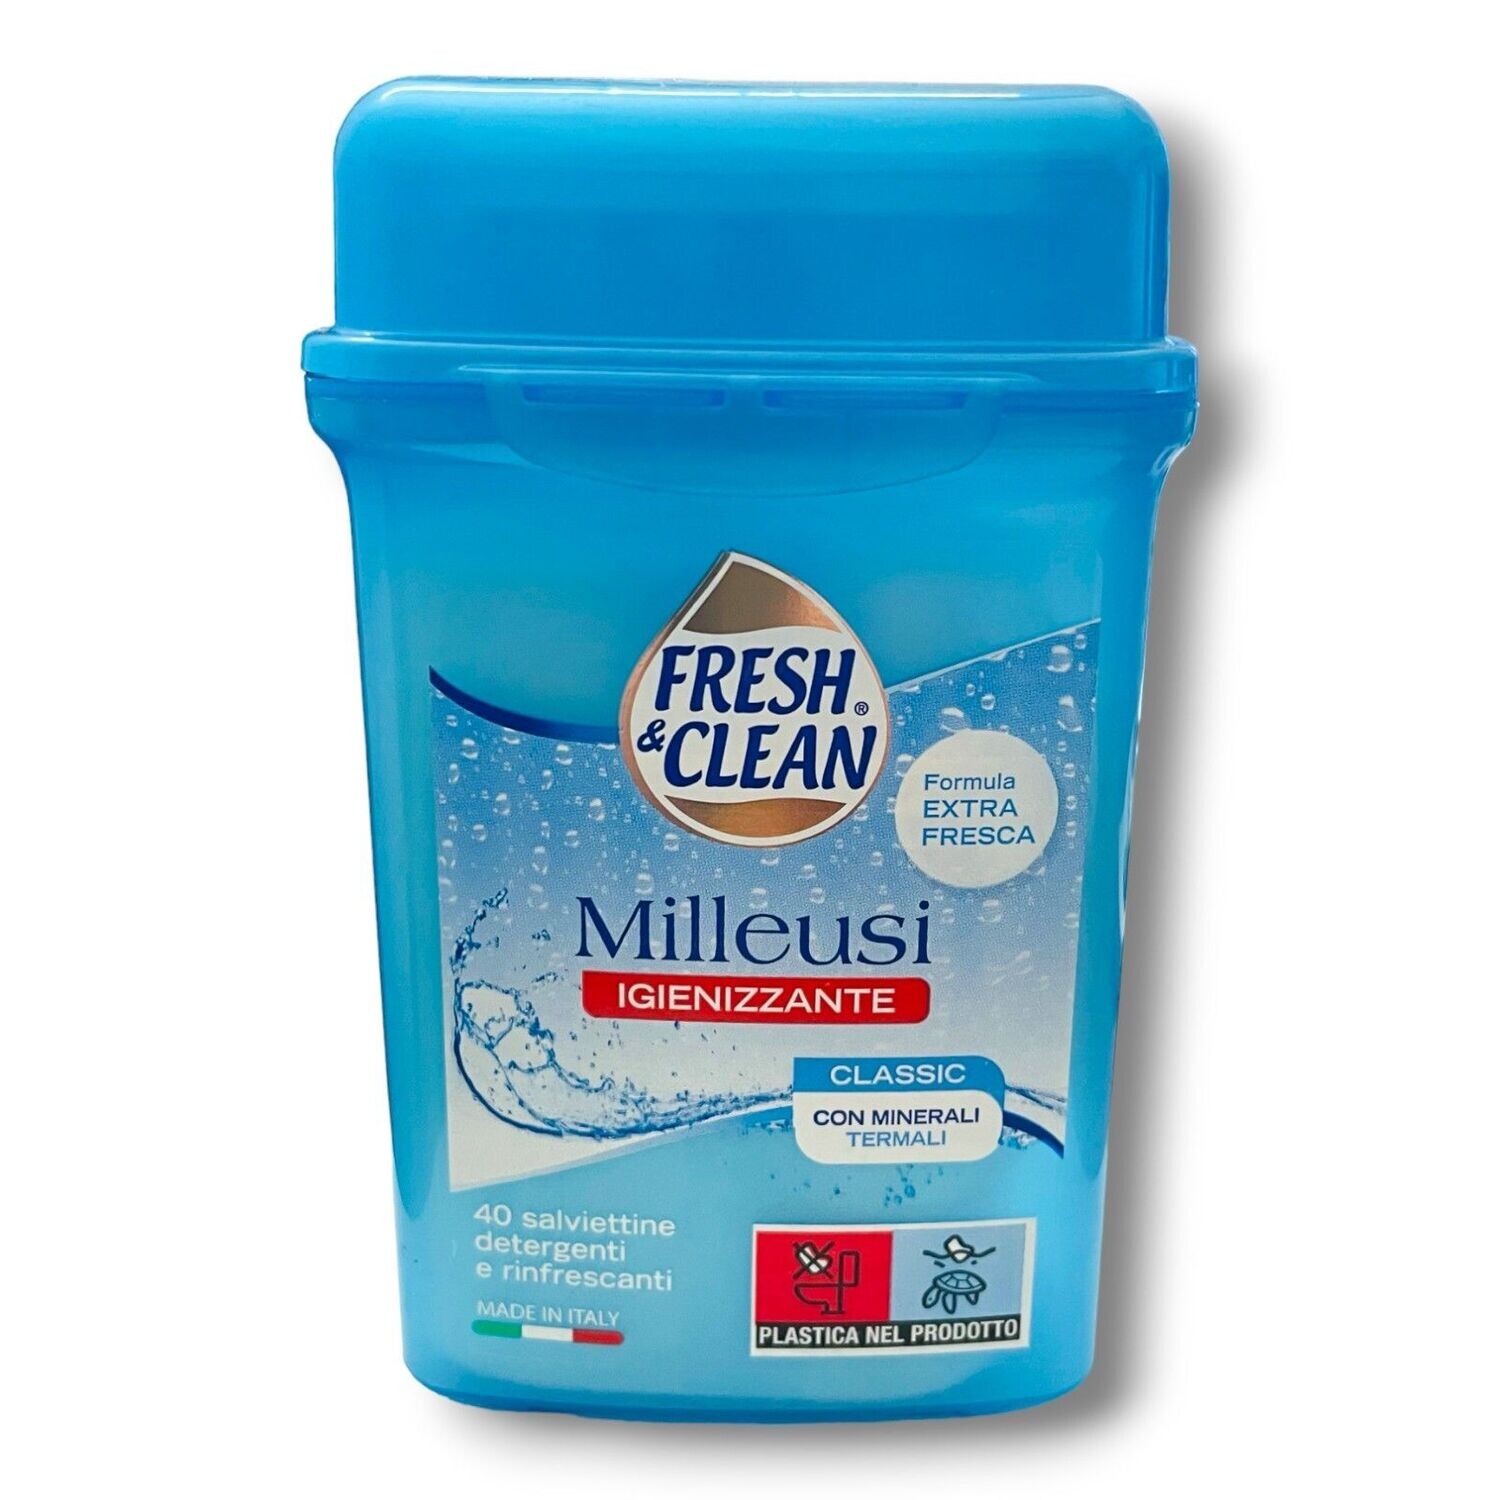 Salviettine Detergenti Mille Usi Igienizzanti Fresh & Clean 40 pezzi